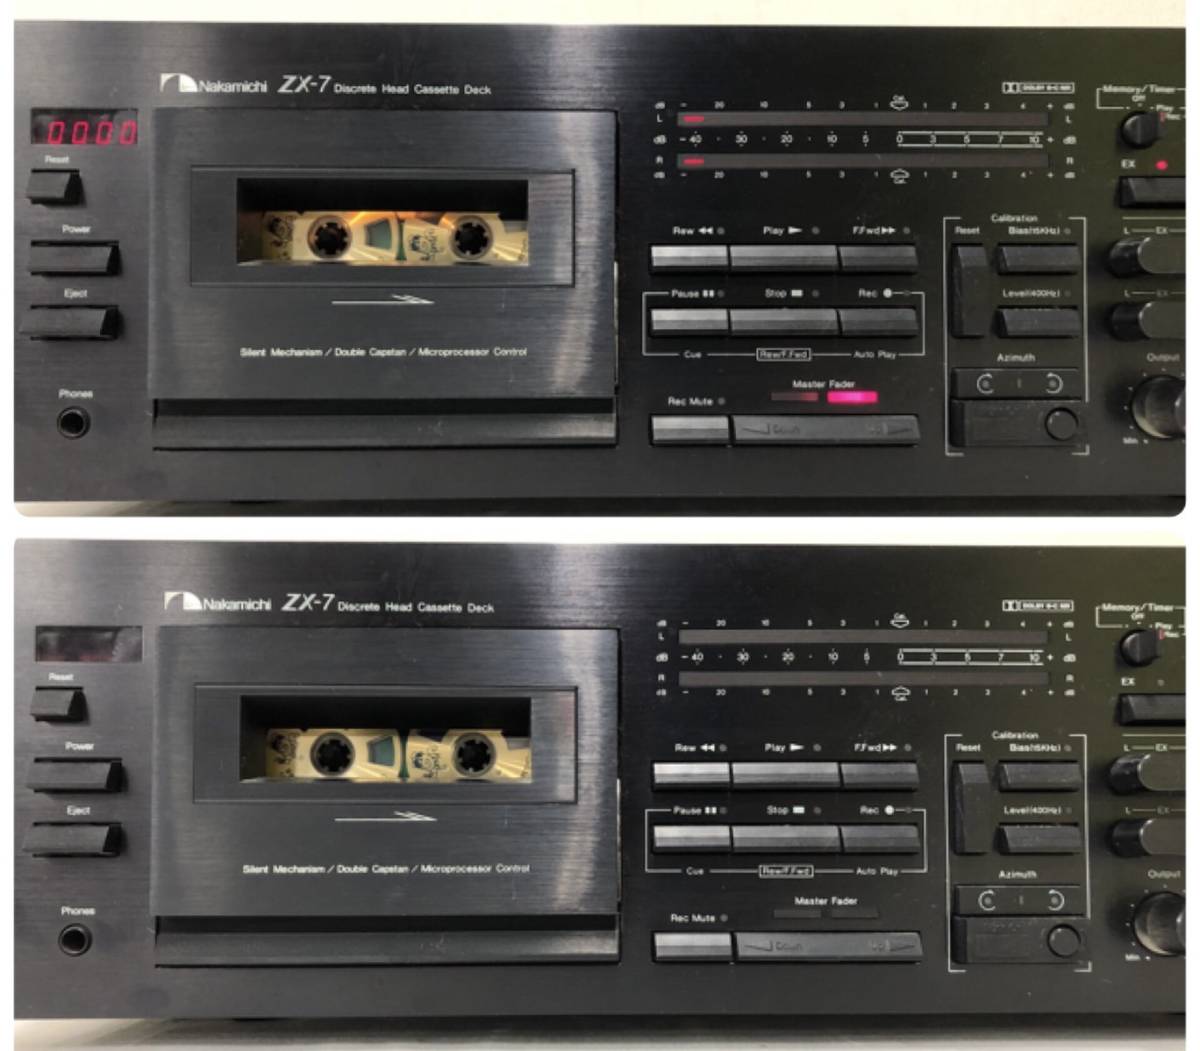 Y6432(122)-104/SR55000【名古屋】Nkamichi 2点まとめ ZX-7 Discrete Head Cassette Deck A124 03078 / MX-100 Microphone Mixer 0704005 _画像5